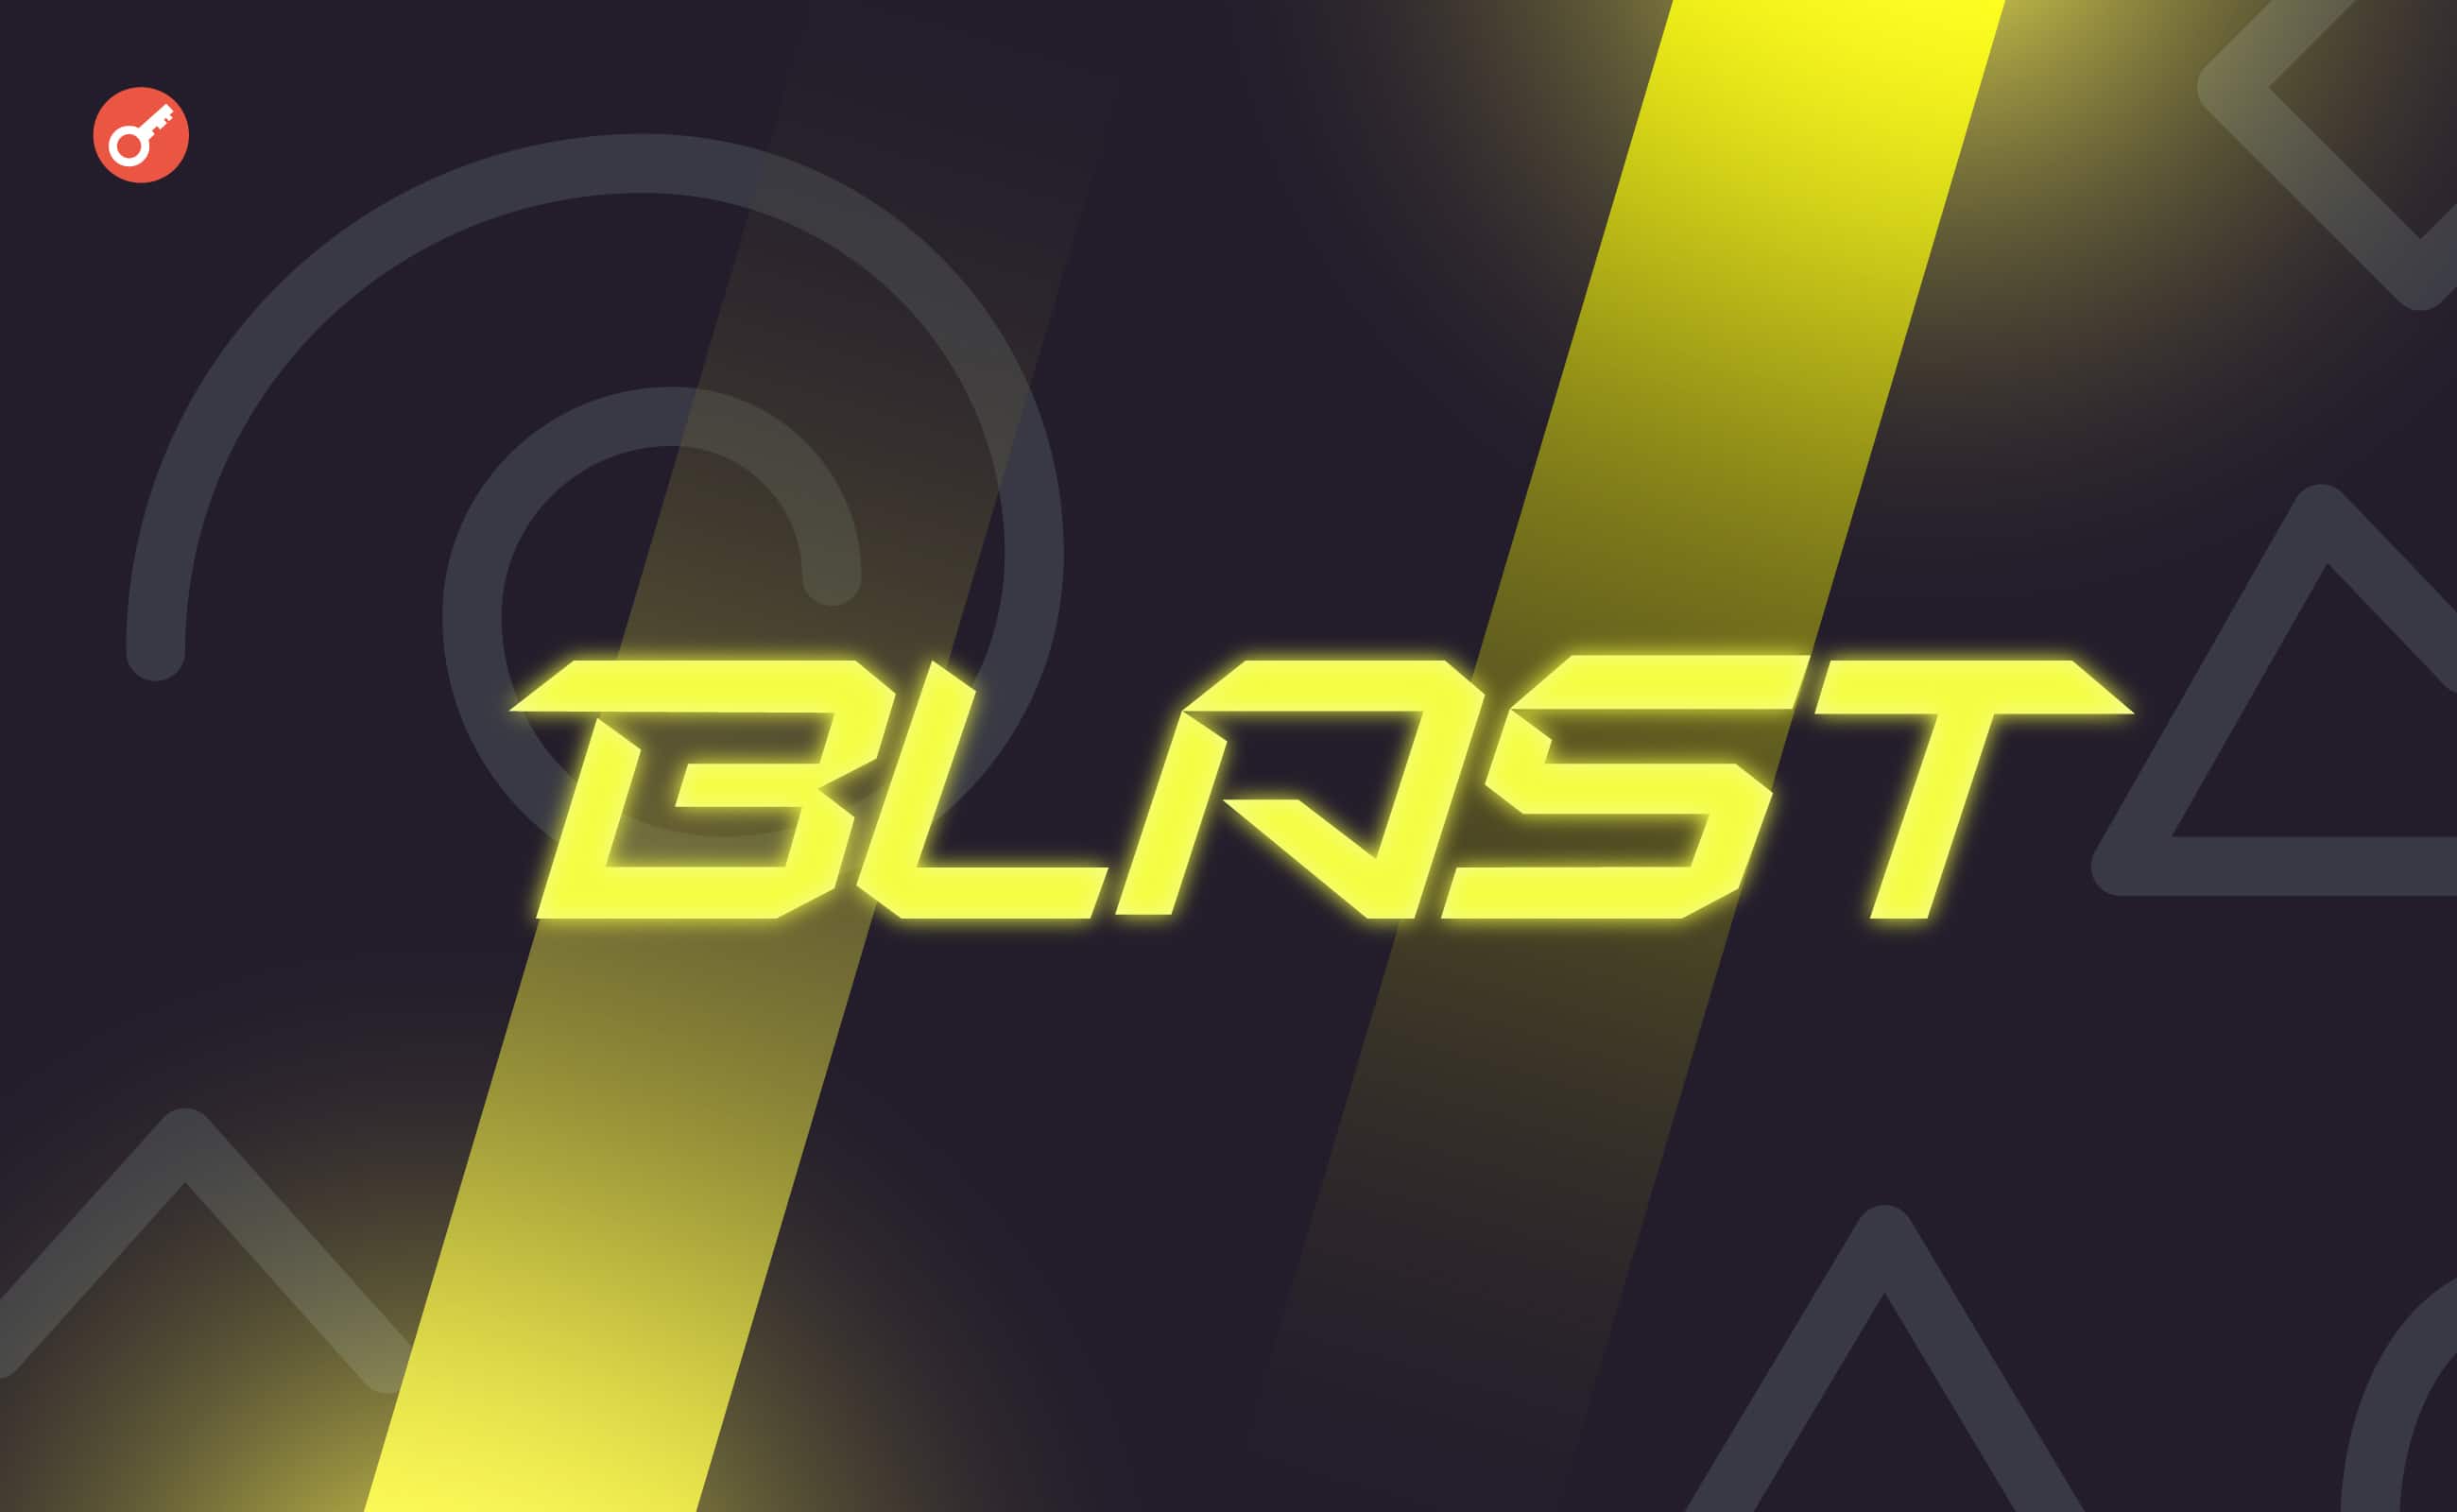 Activities on Blast mainnet for a potential airdrop. Заглавный коллаж статьи.